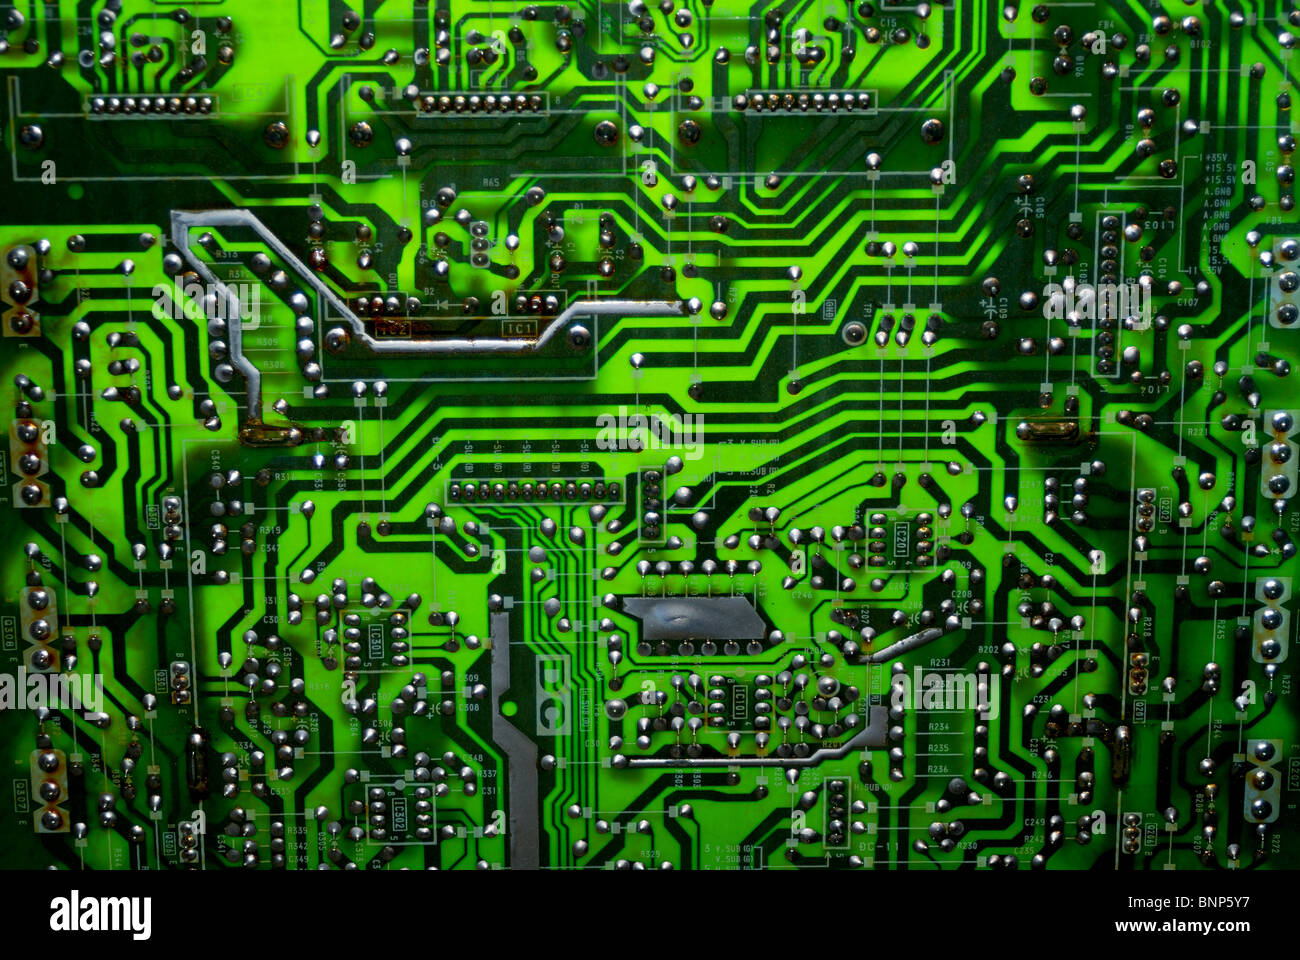 A glowing green computer circuit board. Stock Photo